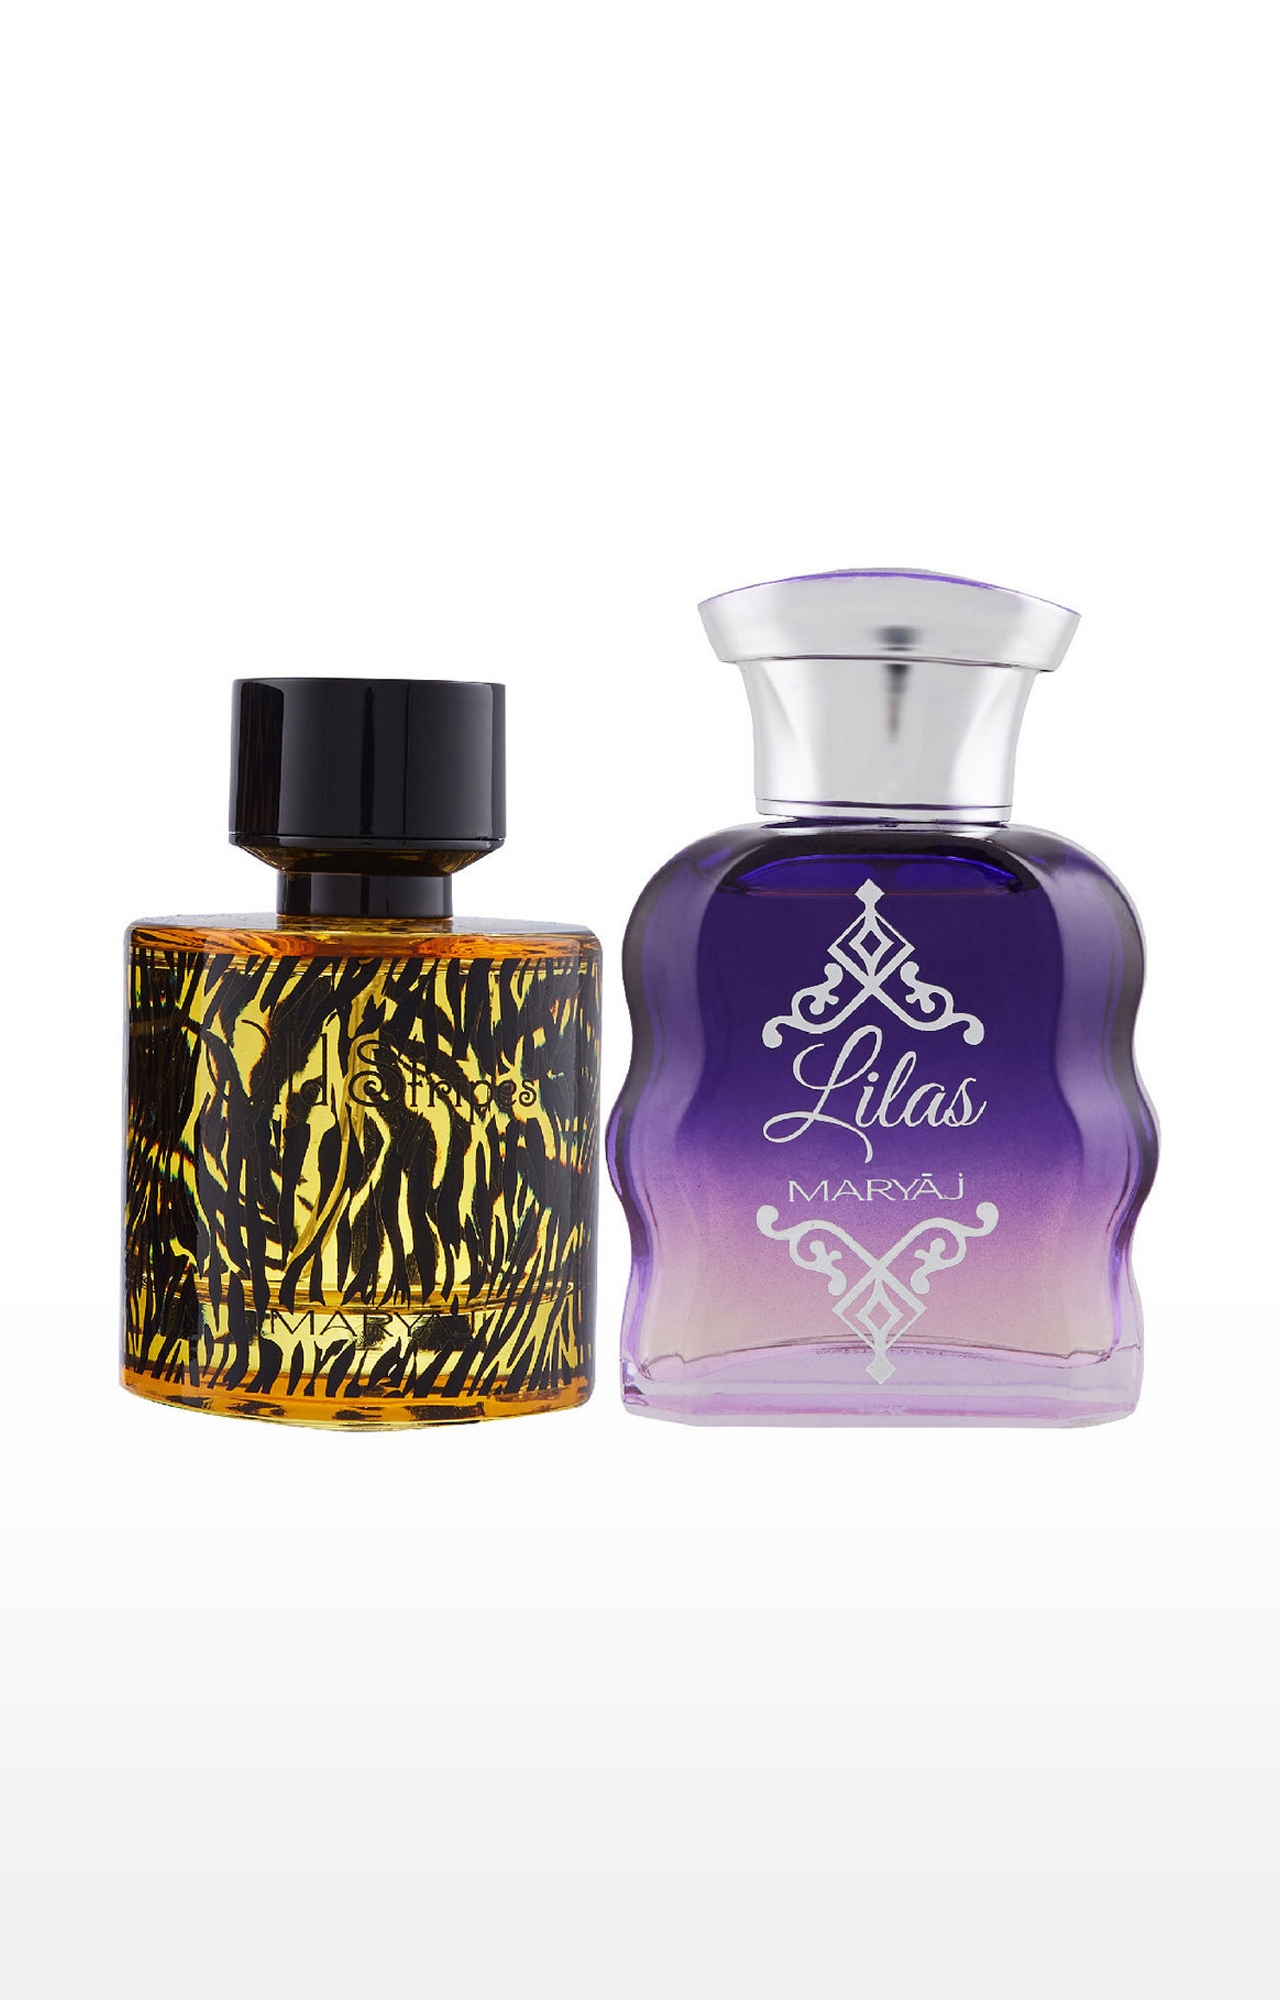 Maryaj | Maryaj Wild Stripes Eau De Parfum Oriental Perfume 100ml for Men and Maryaj Lilas Eau De Parfum Perfume 100ml for Women